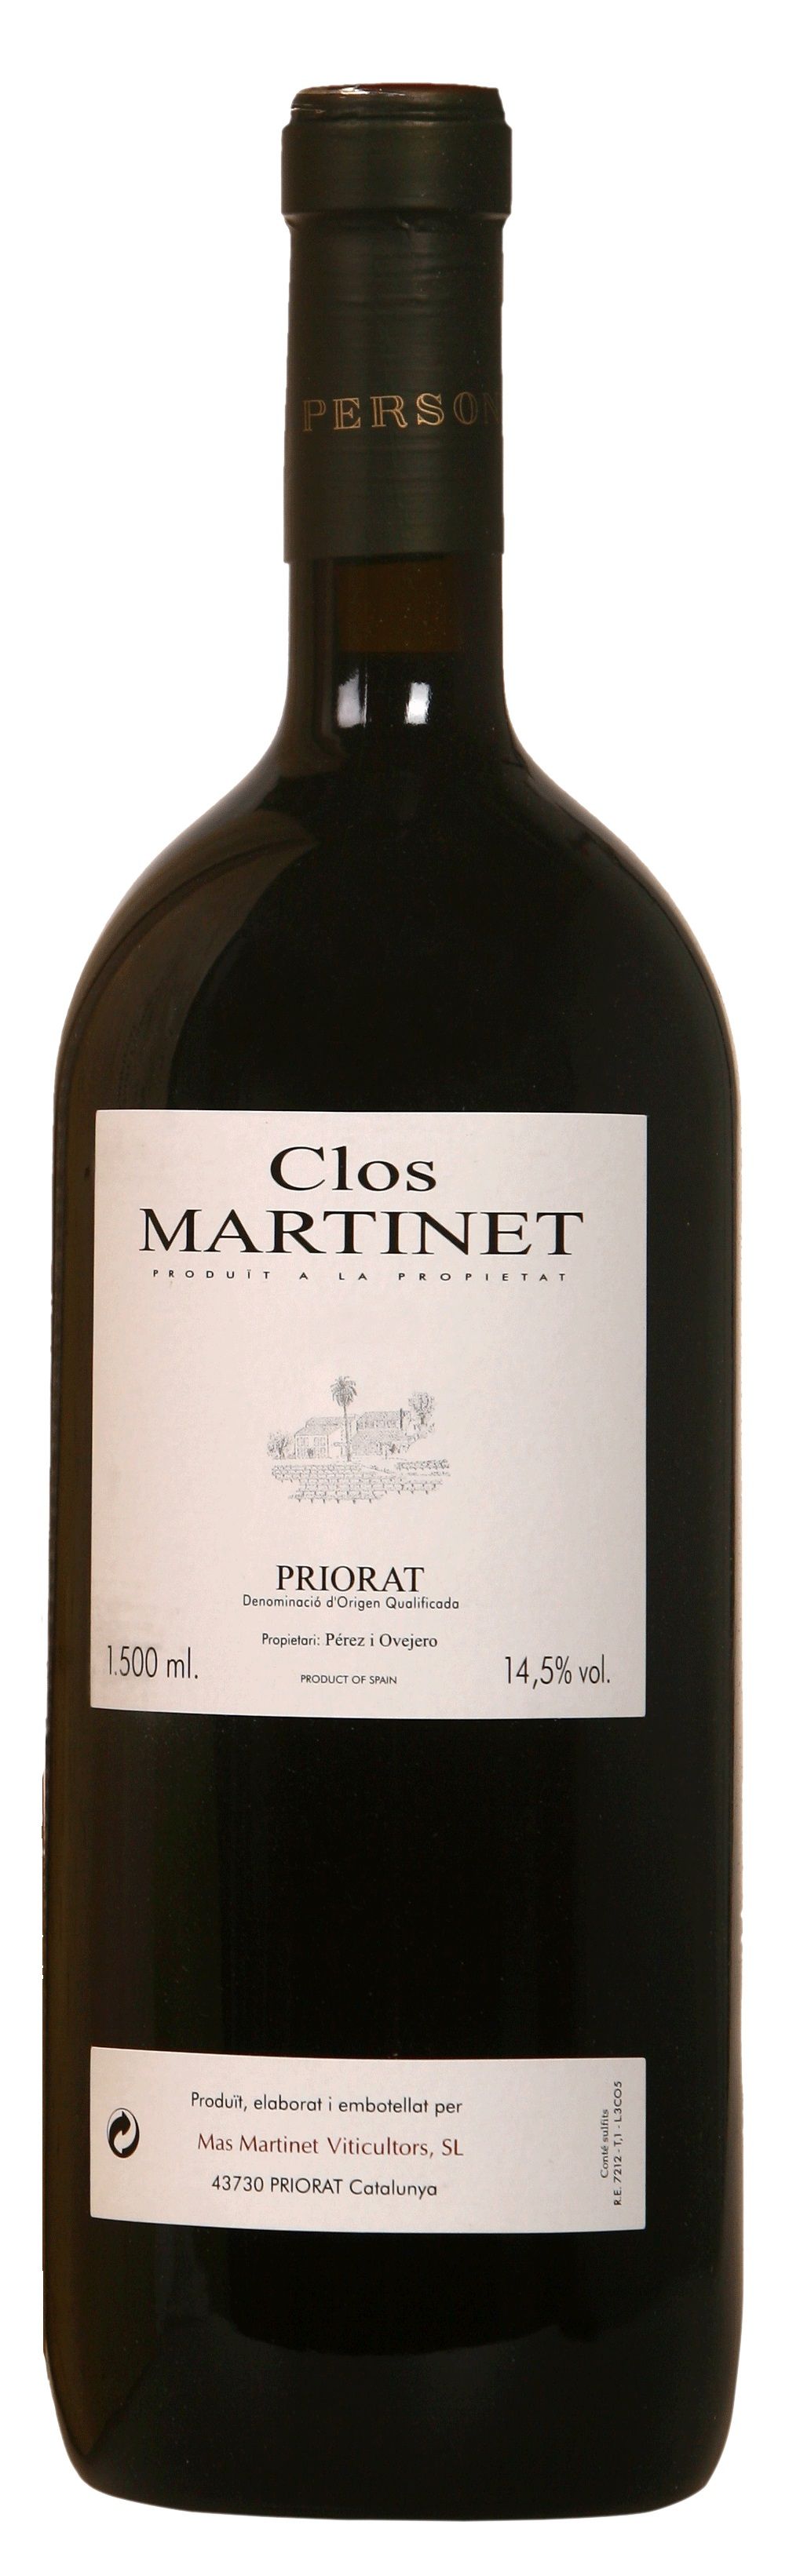 Mas Martinet, Clos Martinet, 2015